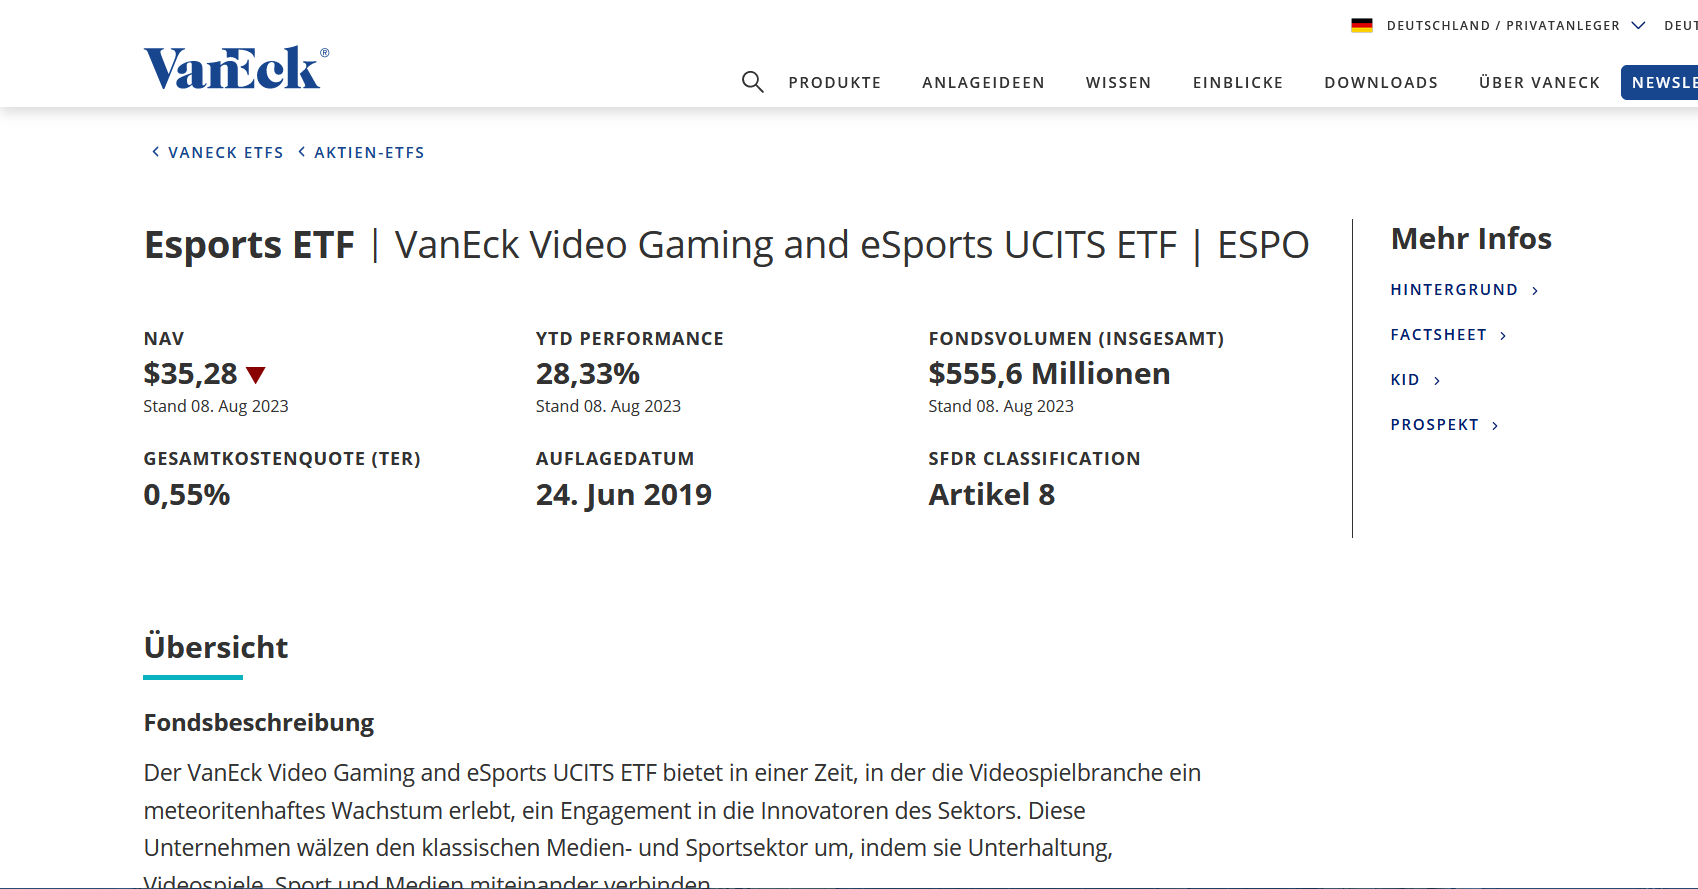 Infos zum VanEck Video Gaming and eSports UCITS ETF